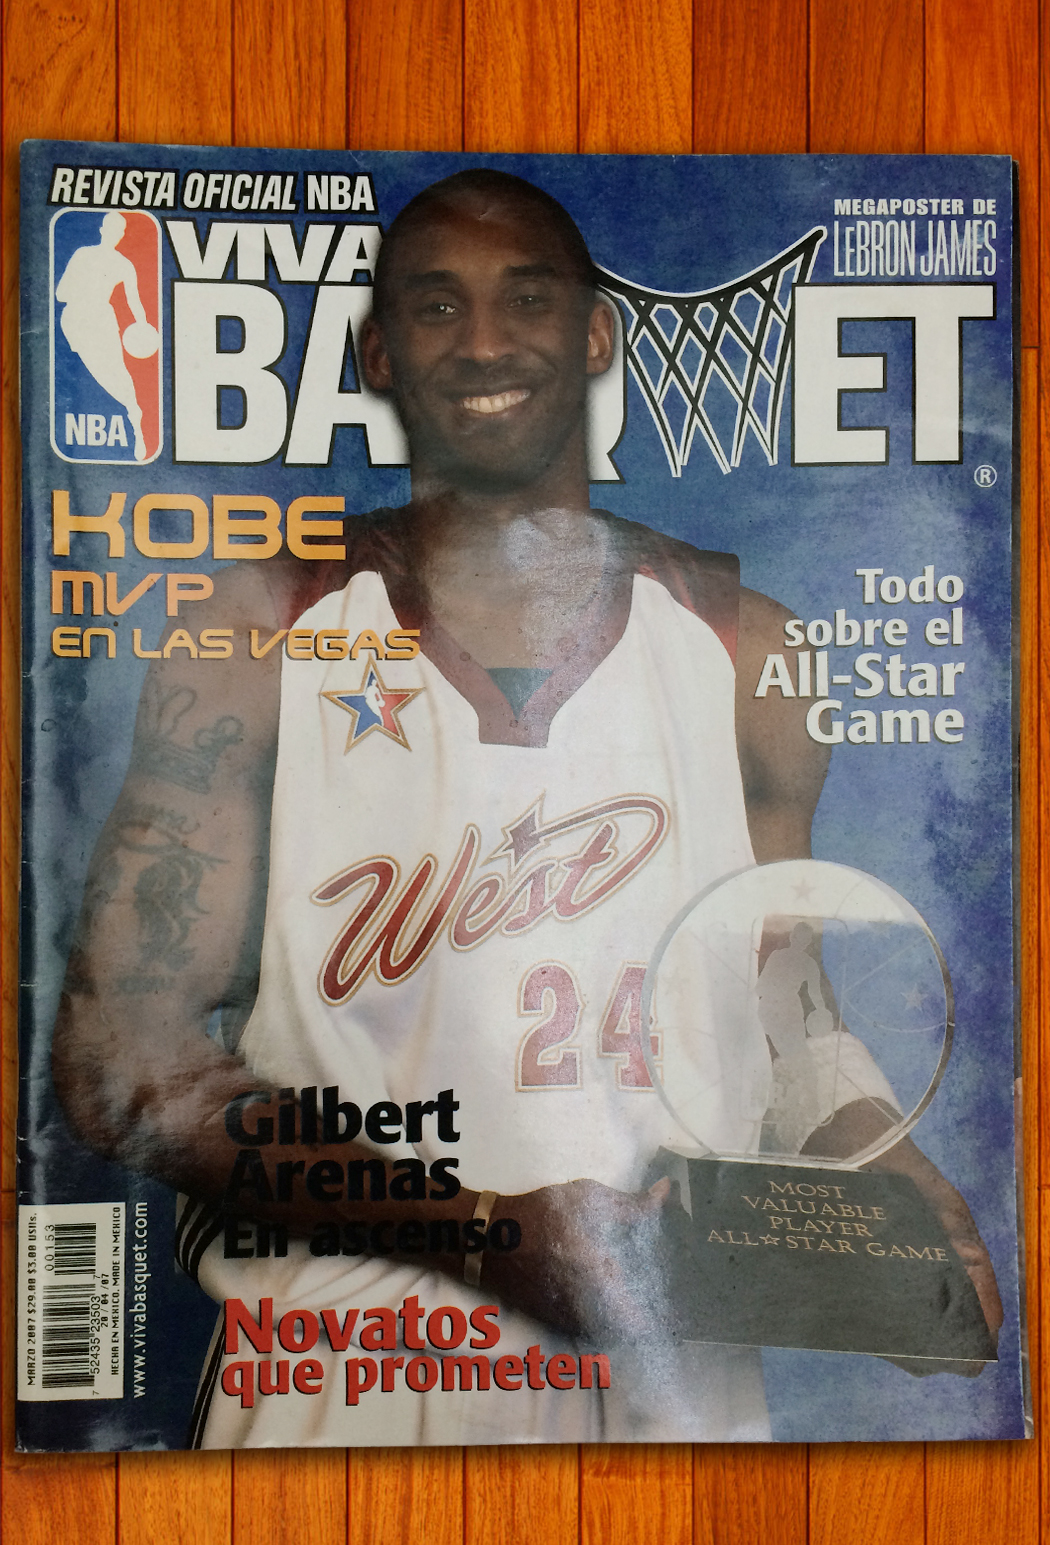 Kobe Bryant en viva basquet foto 7